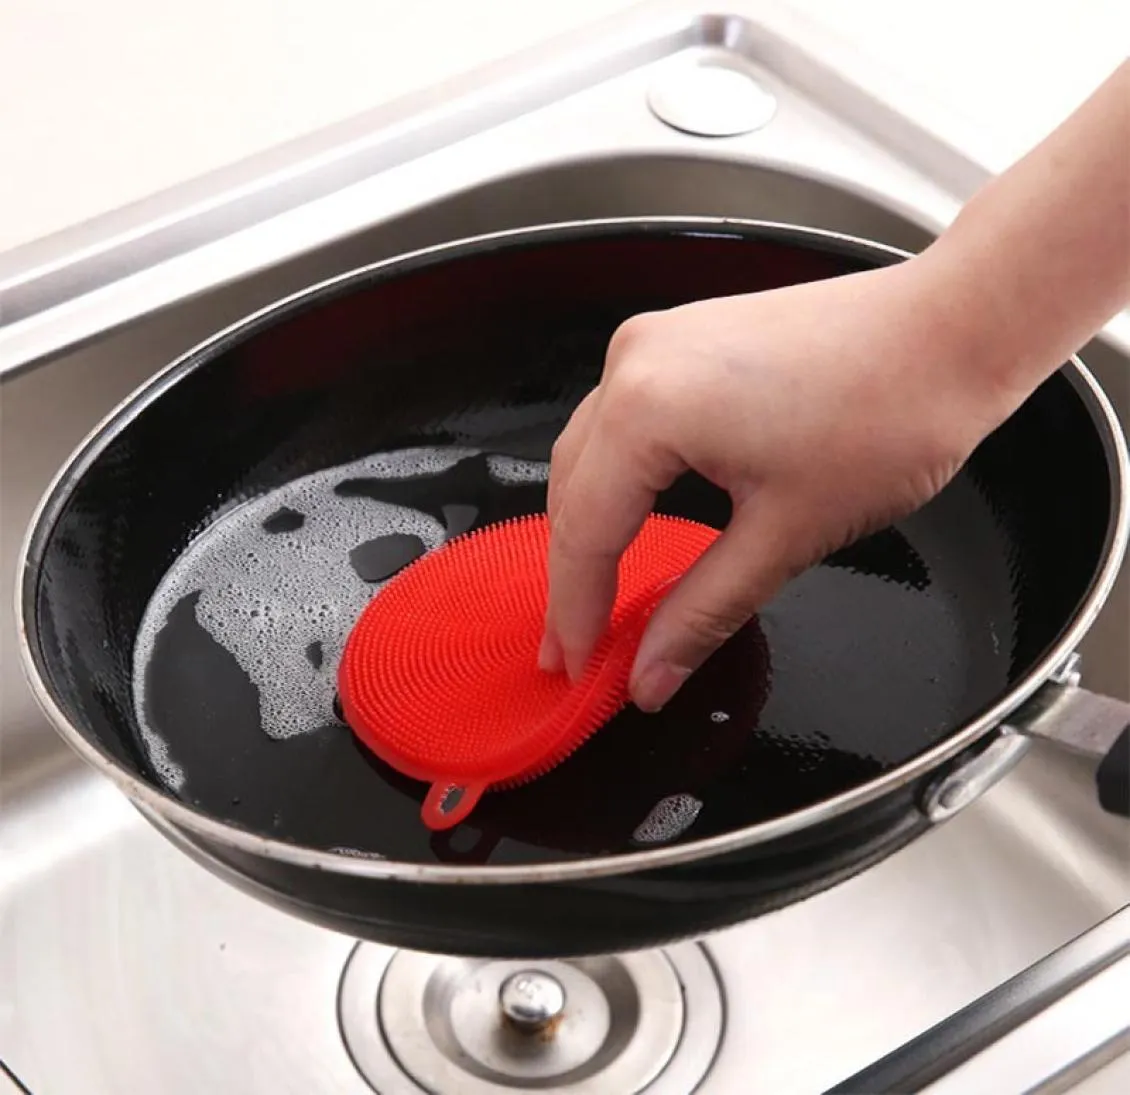 Panos de limpeza de silicone óleo silicone escova de lavar louça tigela escova de limpeza multifuncional pote pan escovas de lavagem cozinha cleane7937830